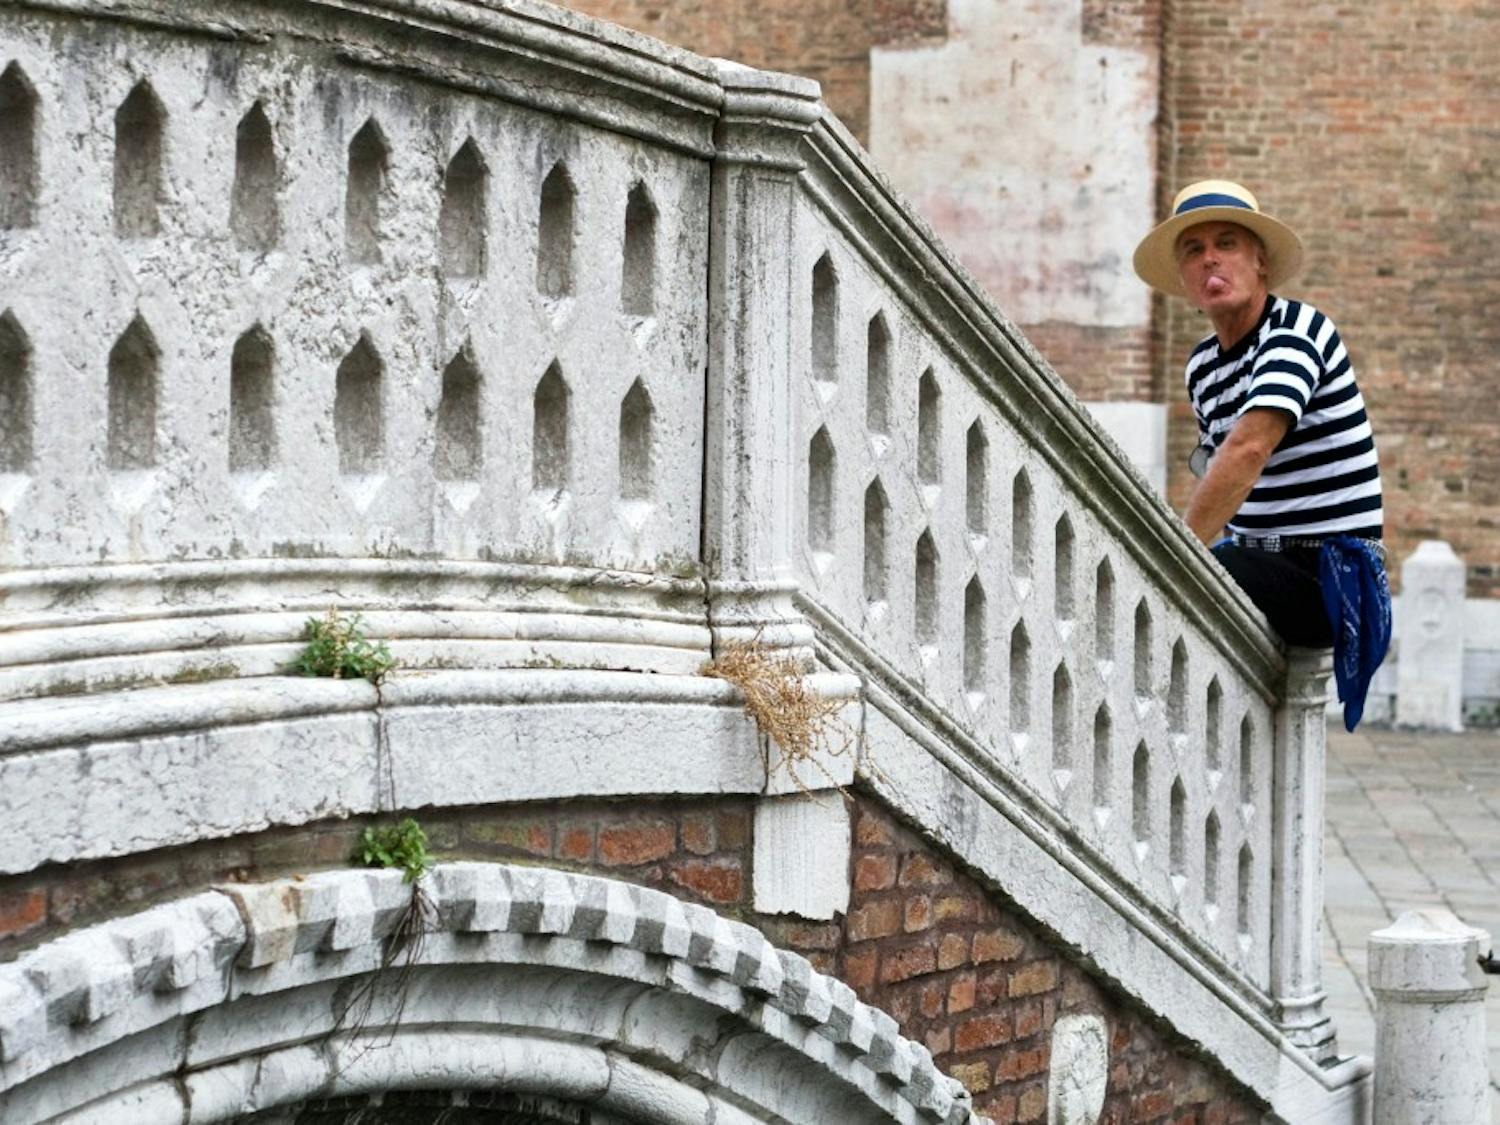 	A gondolier takes a bubblegum break in Venice.